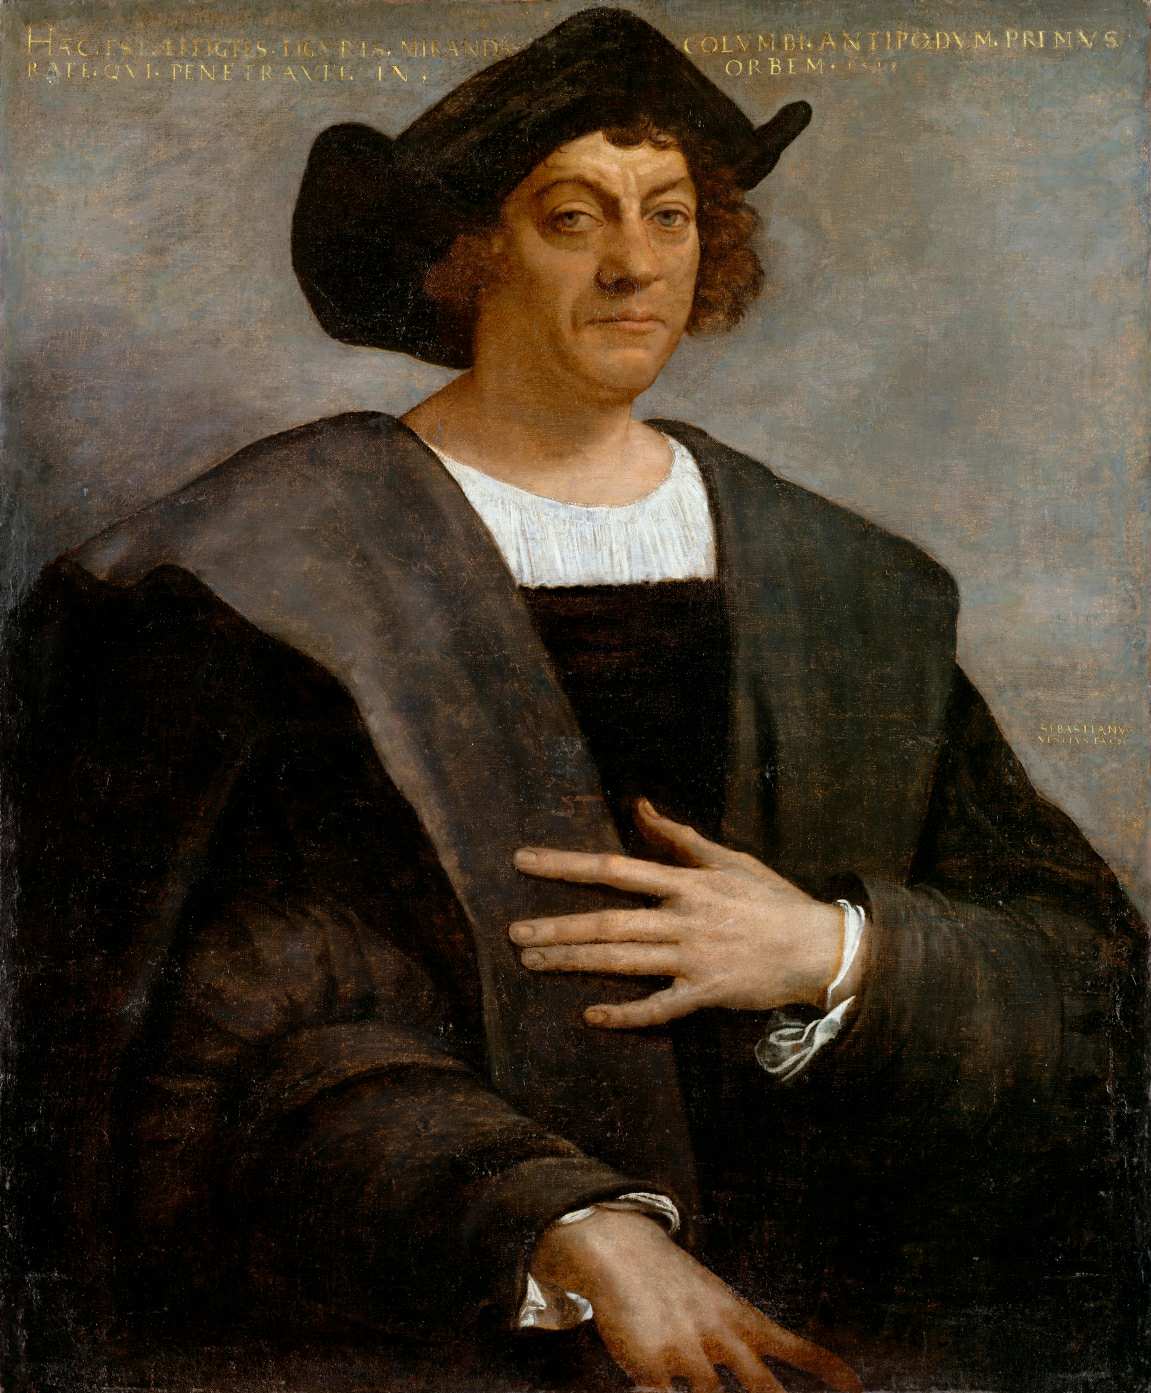 Christopher Columbus, Kensington Runensteen